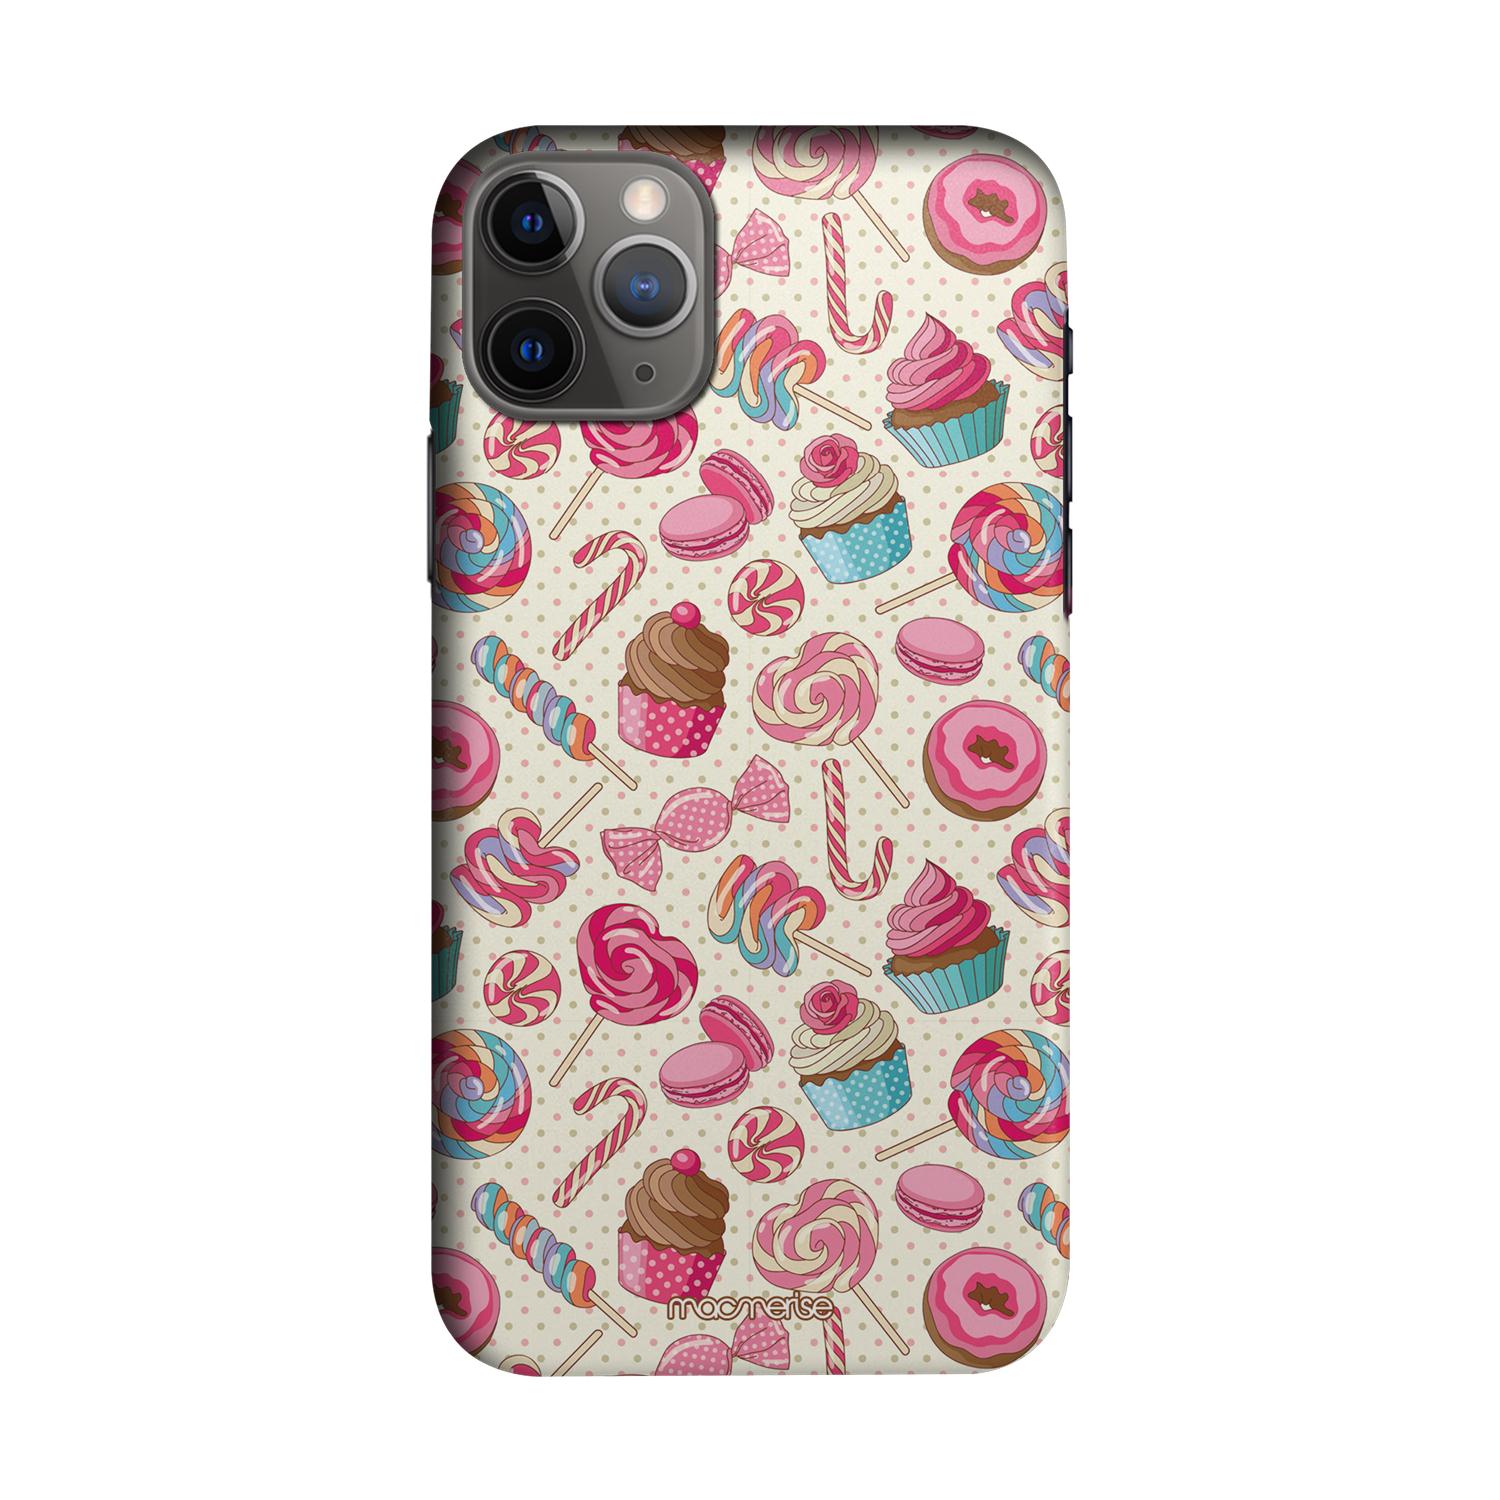 Buy Sugar Rush - Sleek Phone Case for iPhone 11 Pro Max Online